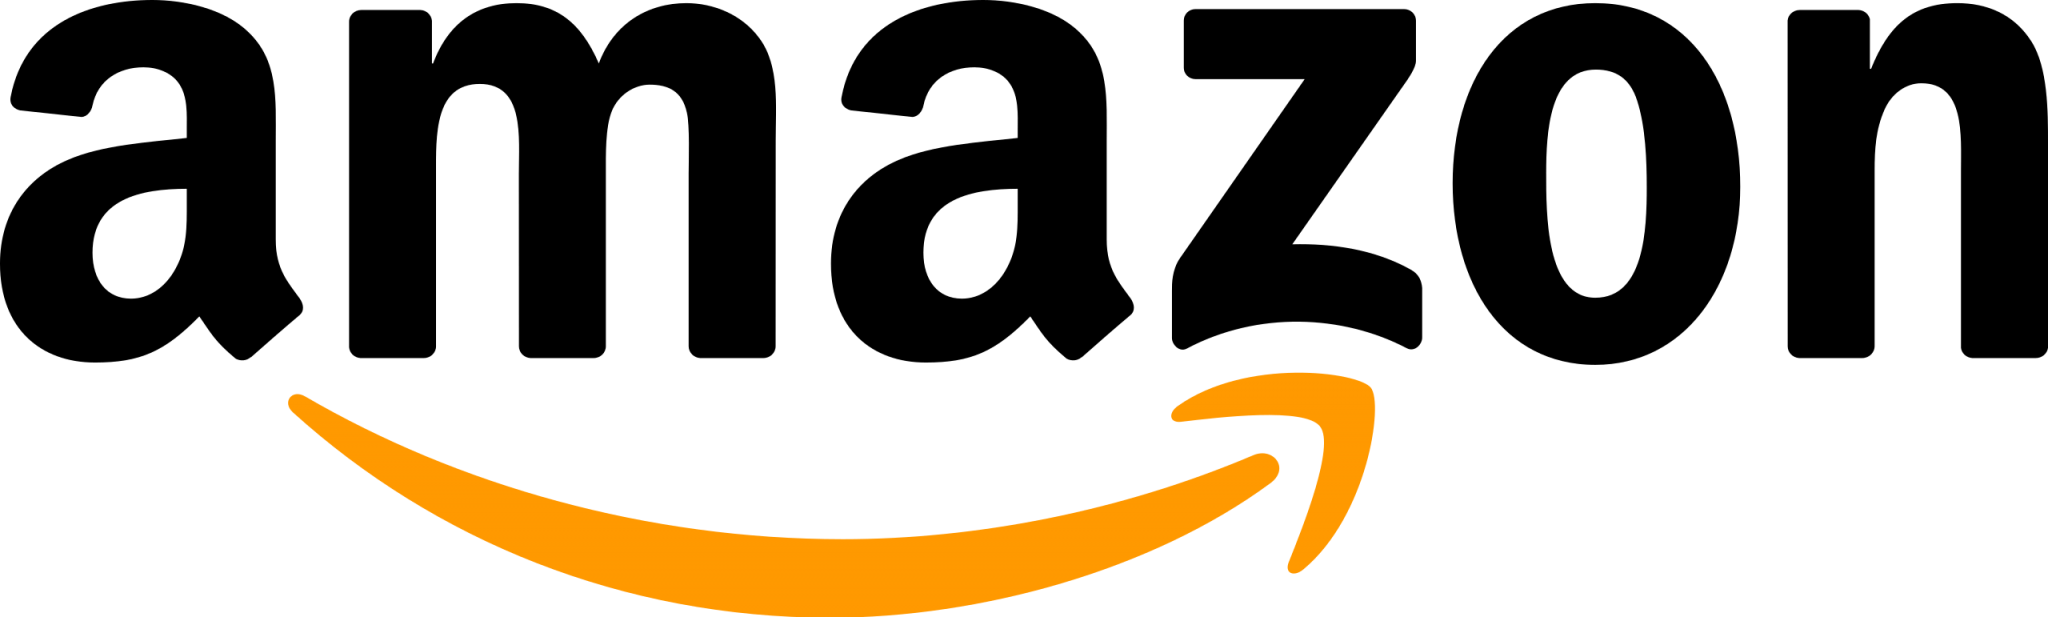 2560px-Amazon_logo.svg